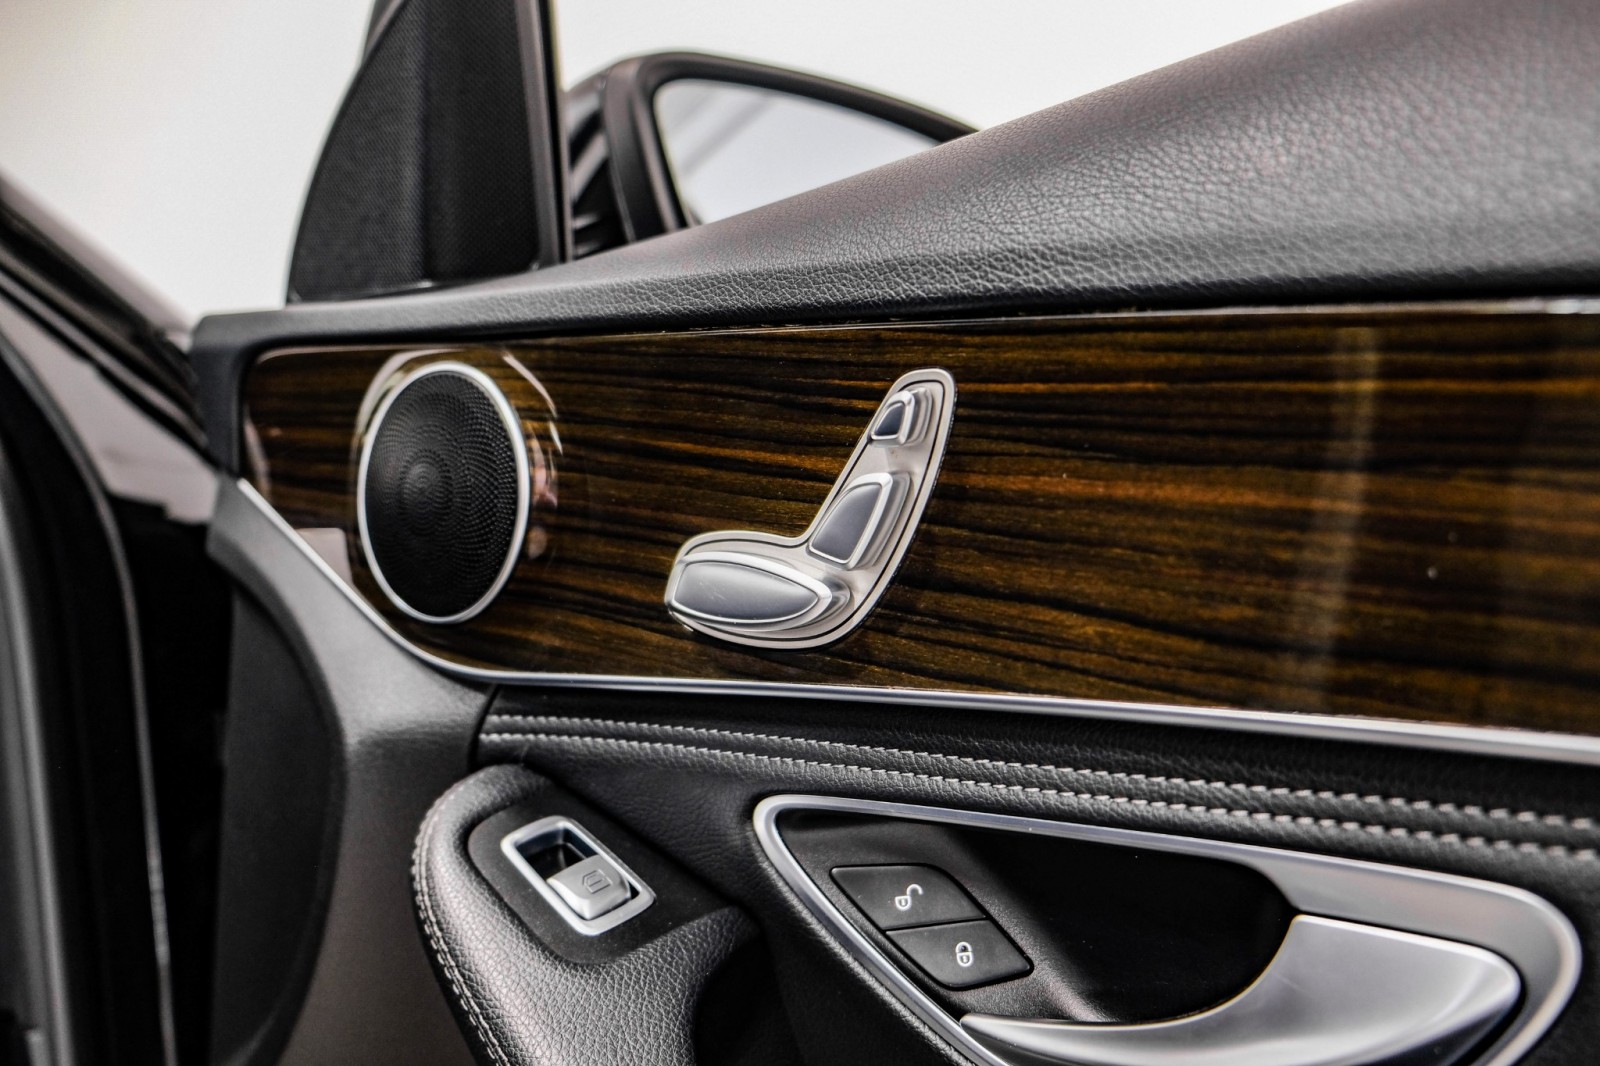 2015 Mercedes-Benz C300 SPORT BLIND SPOT ASSIST NAVIGATION LEATHER SEATS R 44